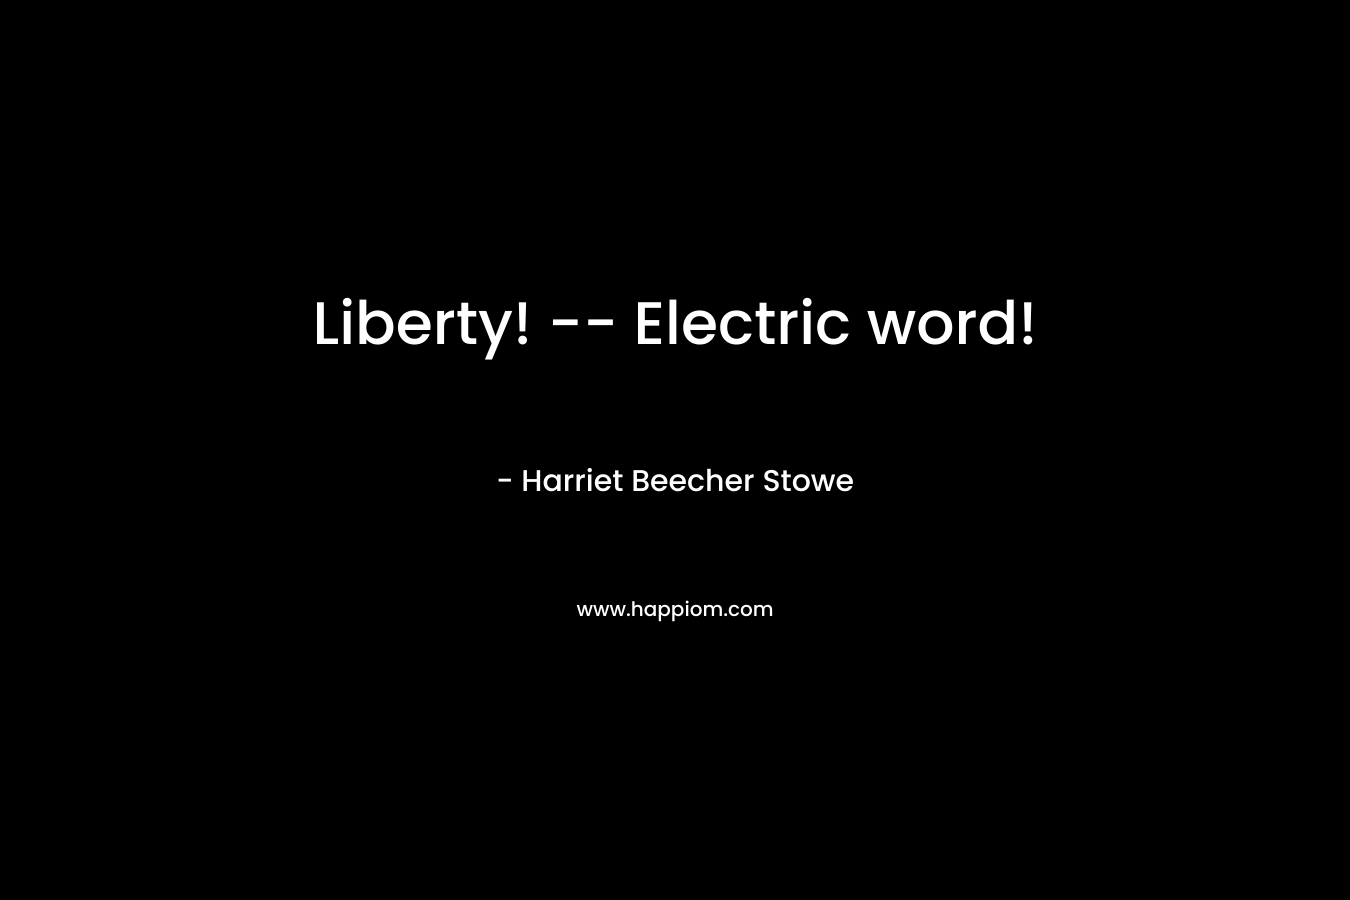 Liberty! -- Electric word!